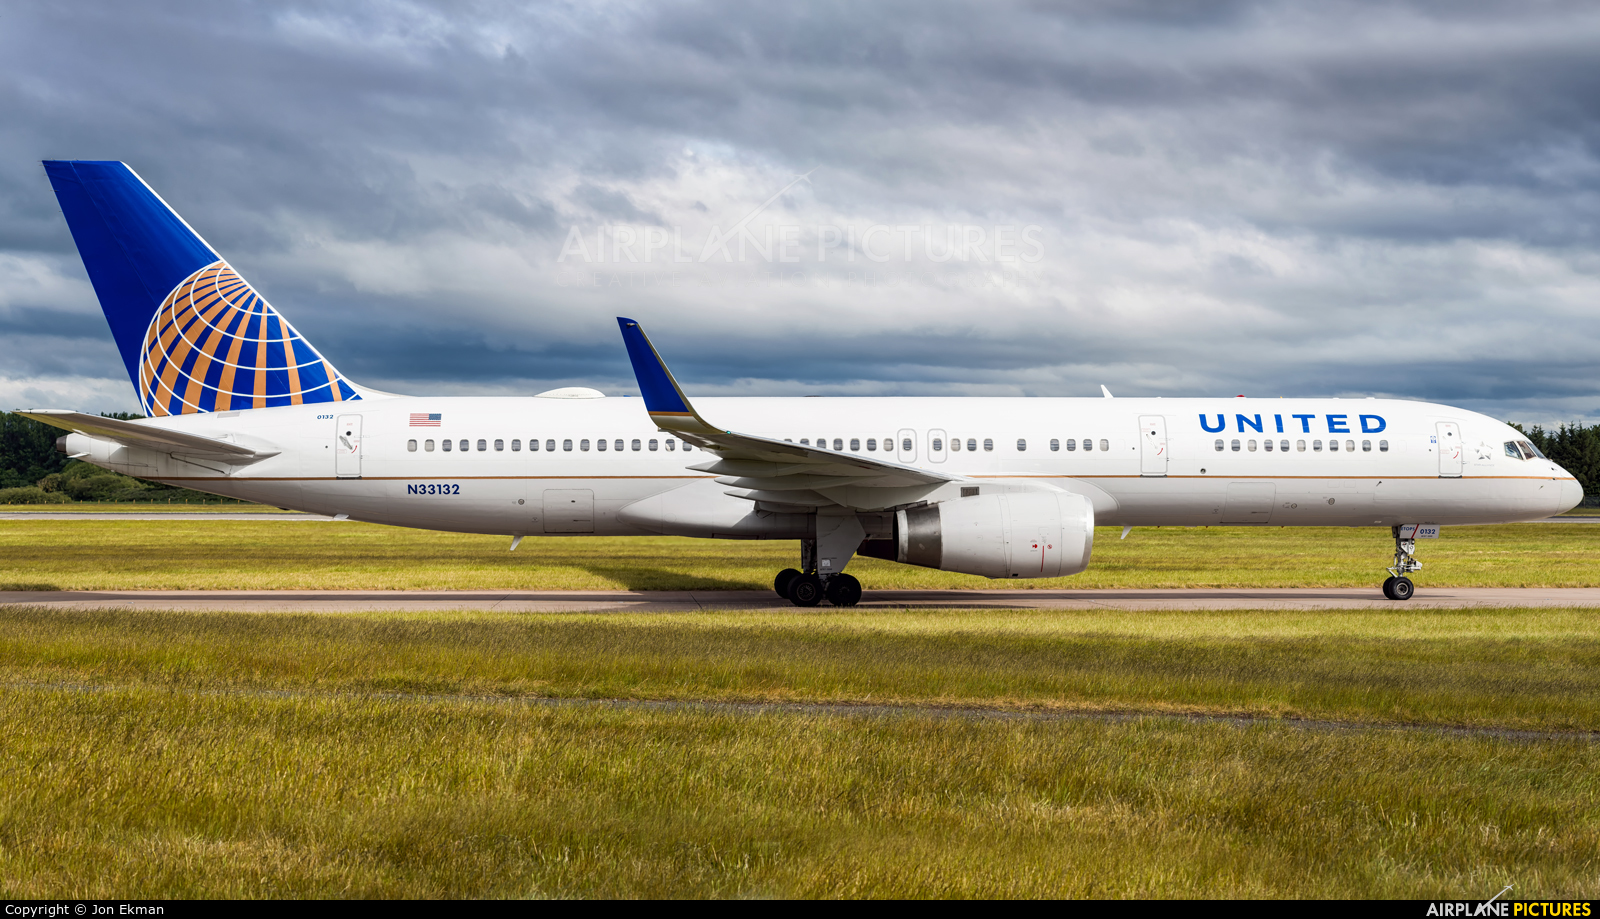 United Airlines N33132 aircraft at Edinburgh